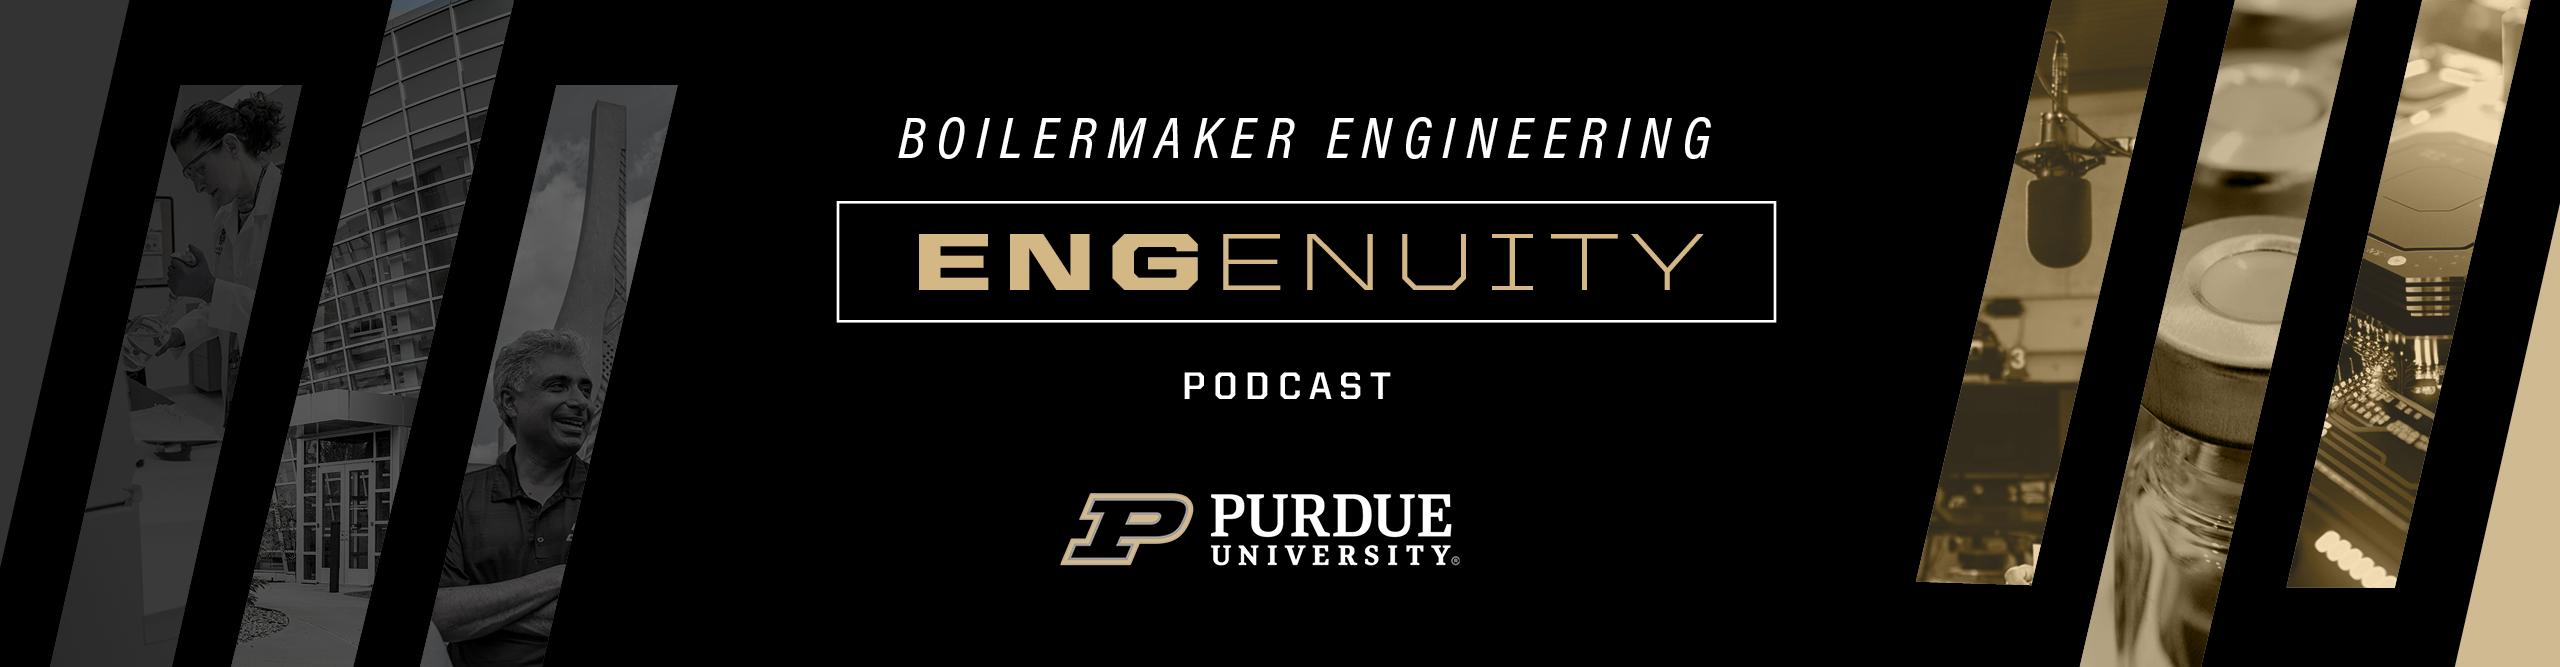 Boilermaker Engineering Engenuity Podcast